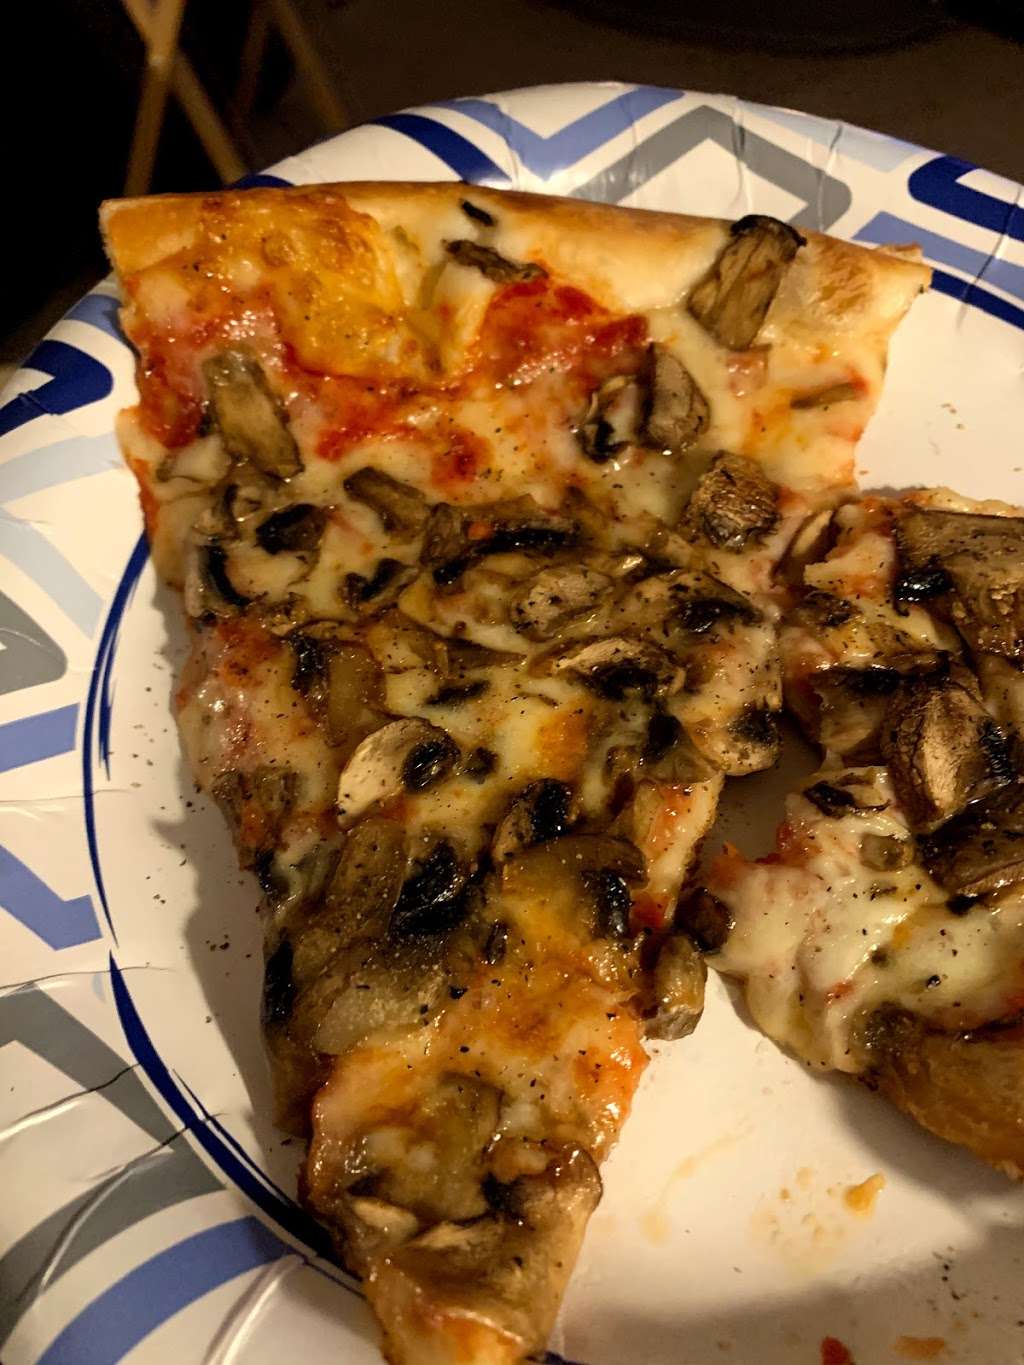 Zeenos Pizza | 23 Bellevue Ave, Penndel, PA 19047, USA | Phone: (215) 757-3632